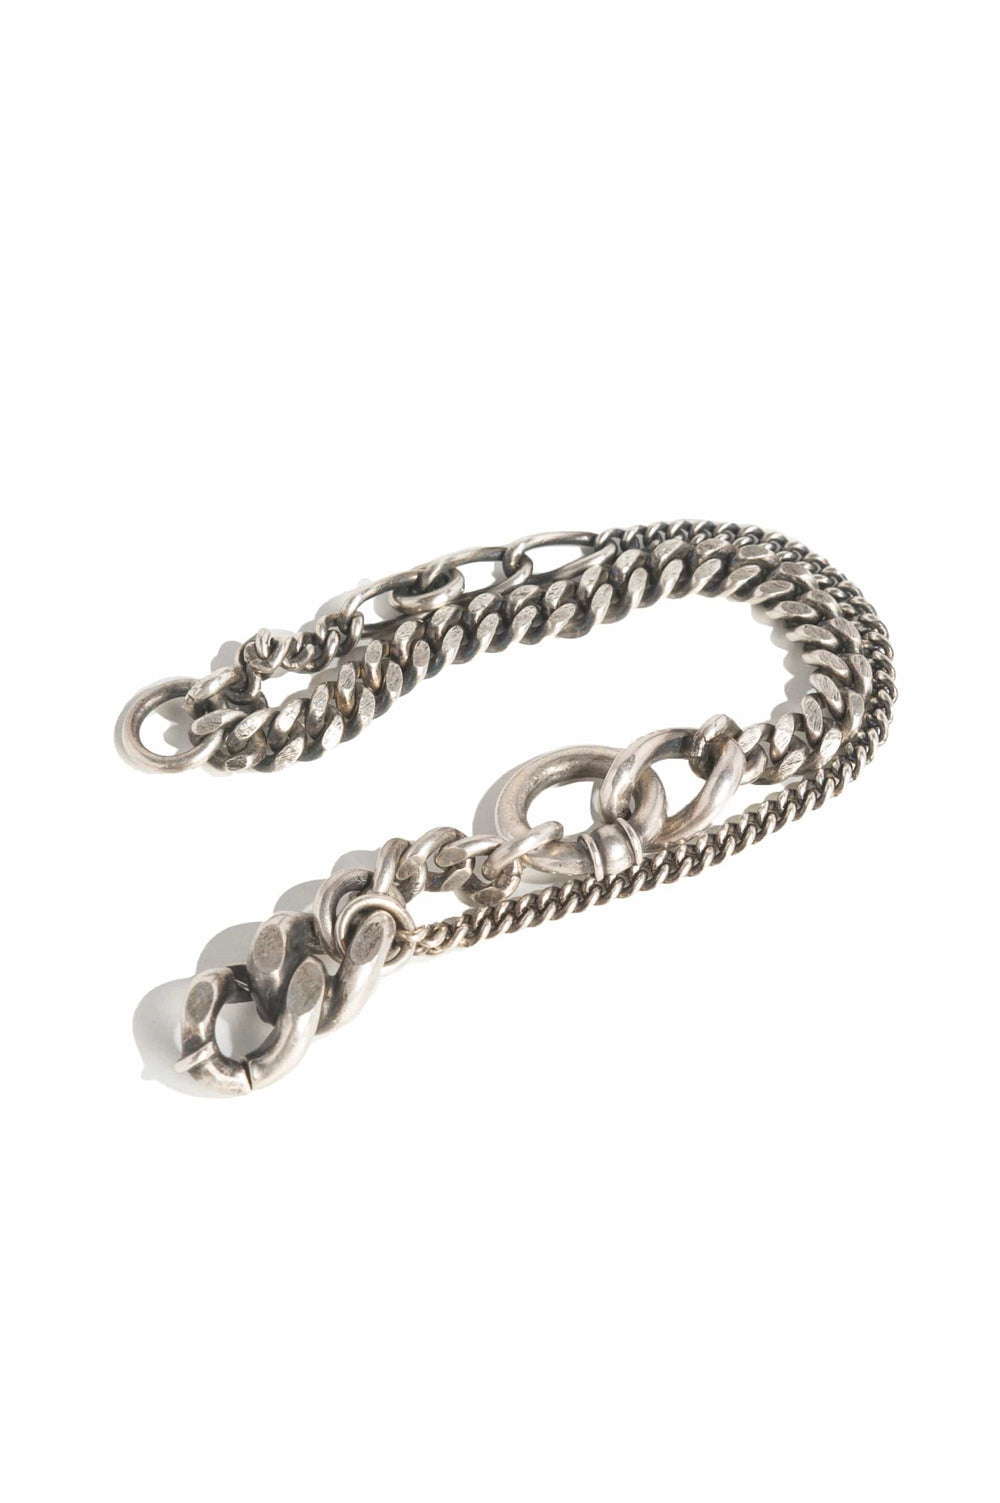 Werkstatt München Bracelet Silver Antidote Chains Two Fashion Ring – and Lifestyle